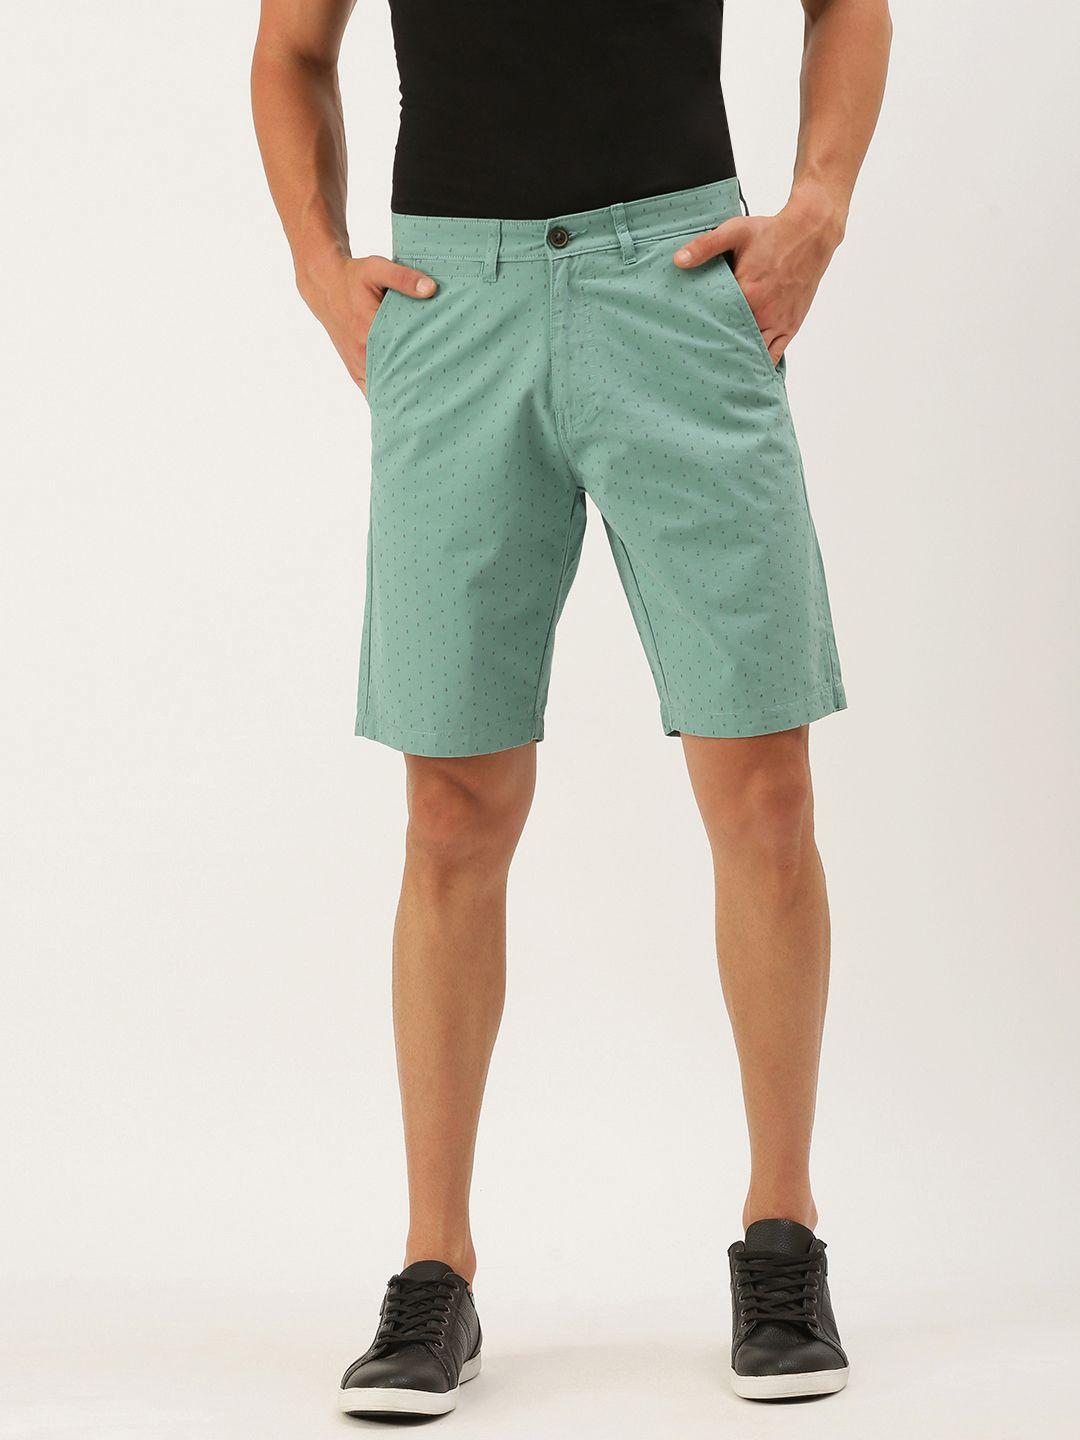 peter england casuals men teal green printed slim fit regular shorts